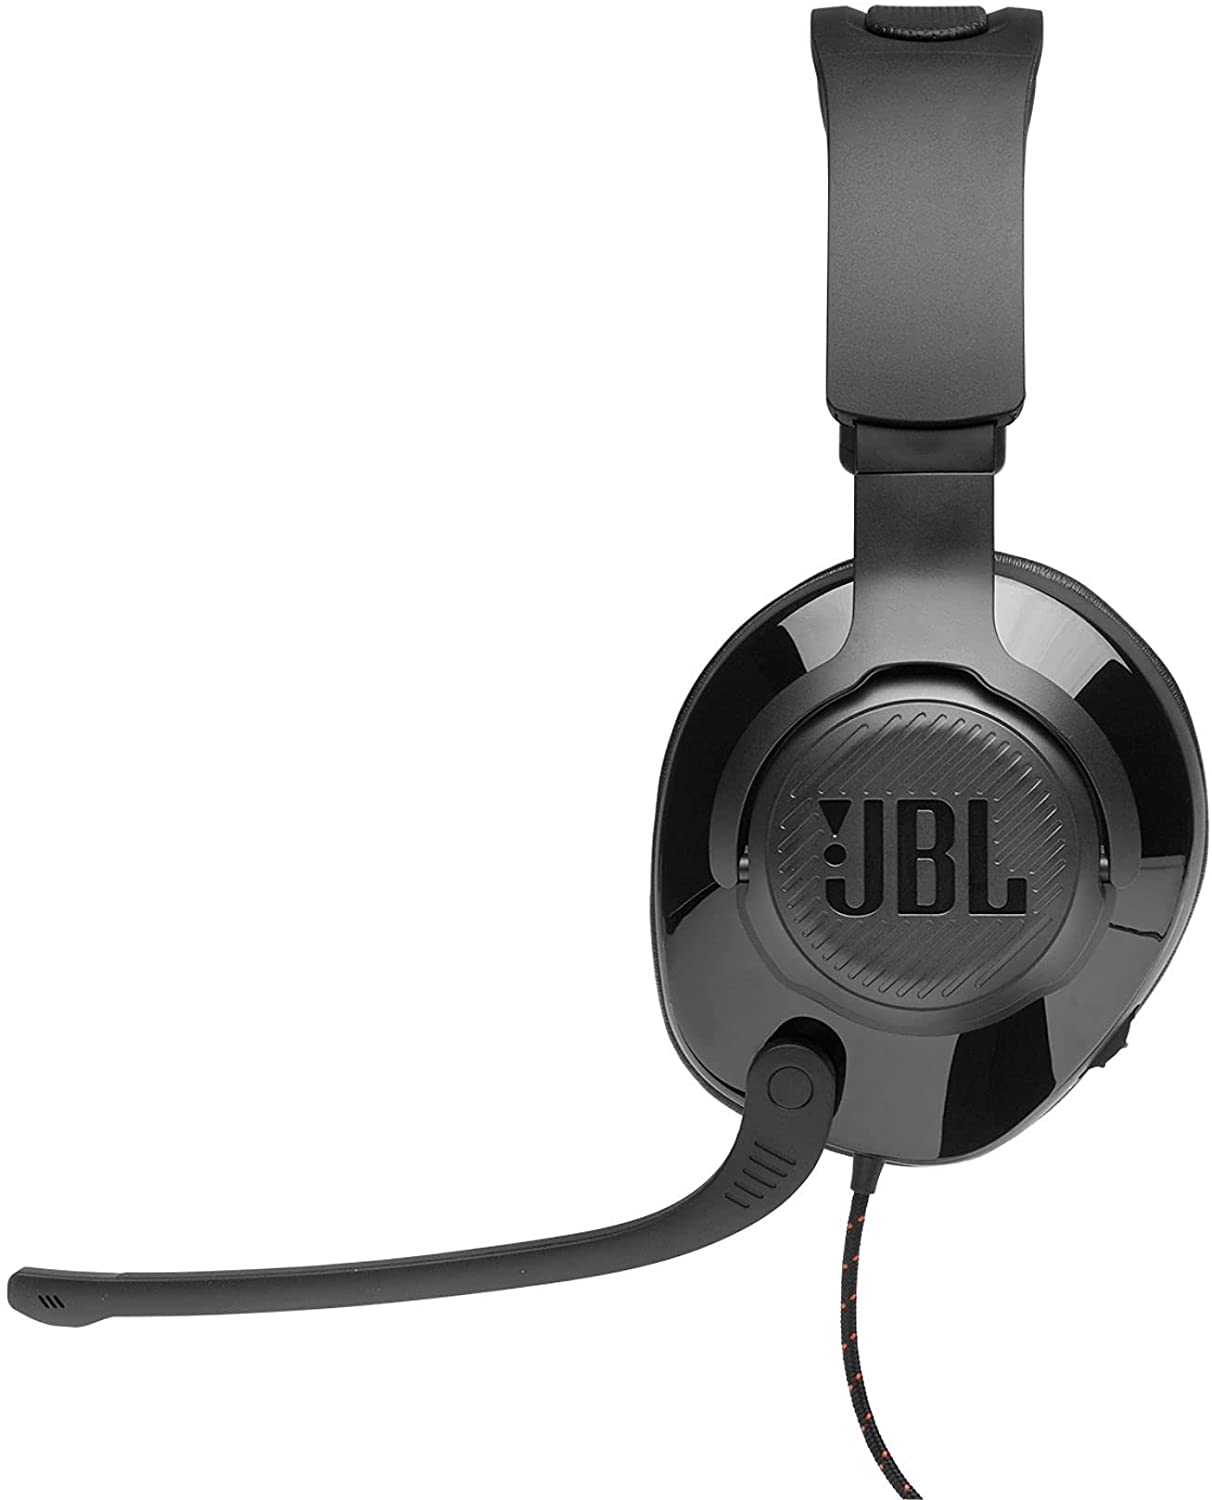 JBL Headphones at